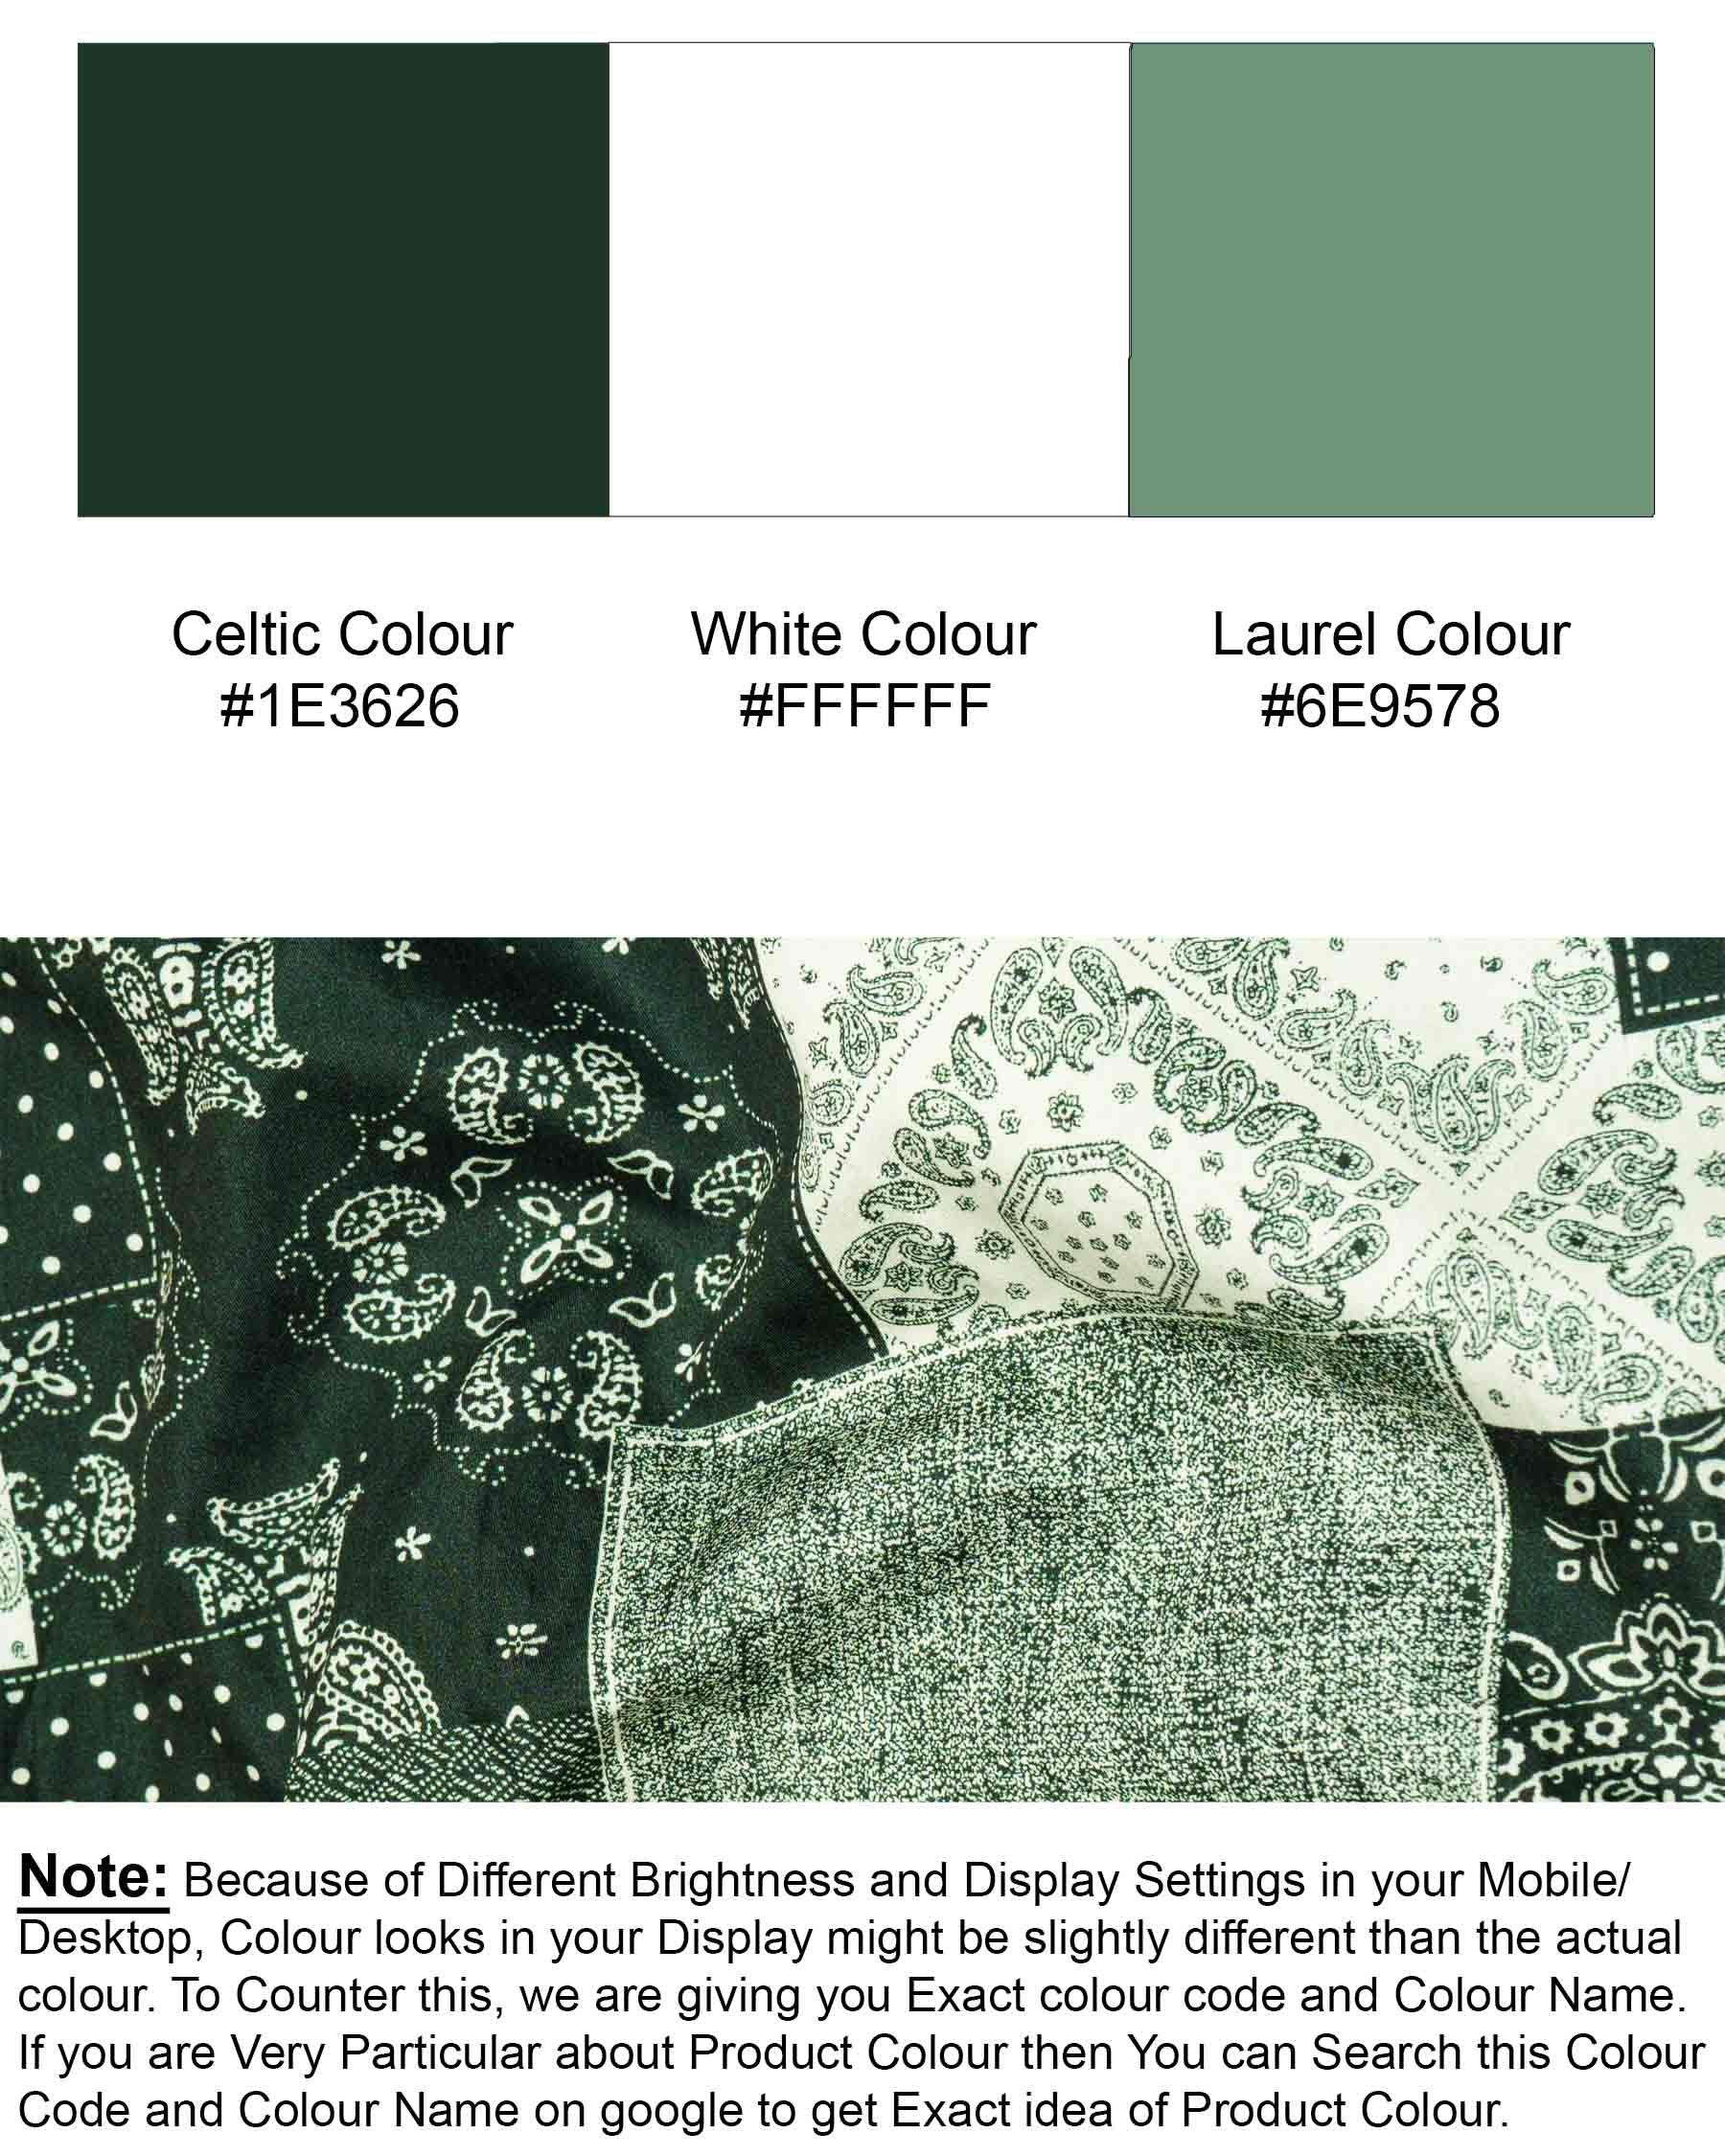 Celtic Green Quirky Printed Super Soft Premium Cotton Kurta Shirt 6546-KS-38,6546-KS-H-38,6546-KS-39,6546-KS-H-39,6546-KS-40,6546-KS-H-40,6546-KS-42,6546-KS-H-42,6546-KS-44,6546-KS-H-44,6546-KS-46,6546-KS-H-46,6546-KS-48,6546-KS-H-48,6546-KS-50,6546-KS-H-50,6546-KS-52,6546-KS-H-52